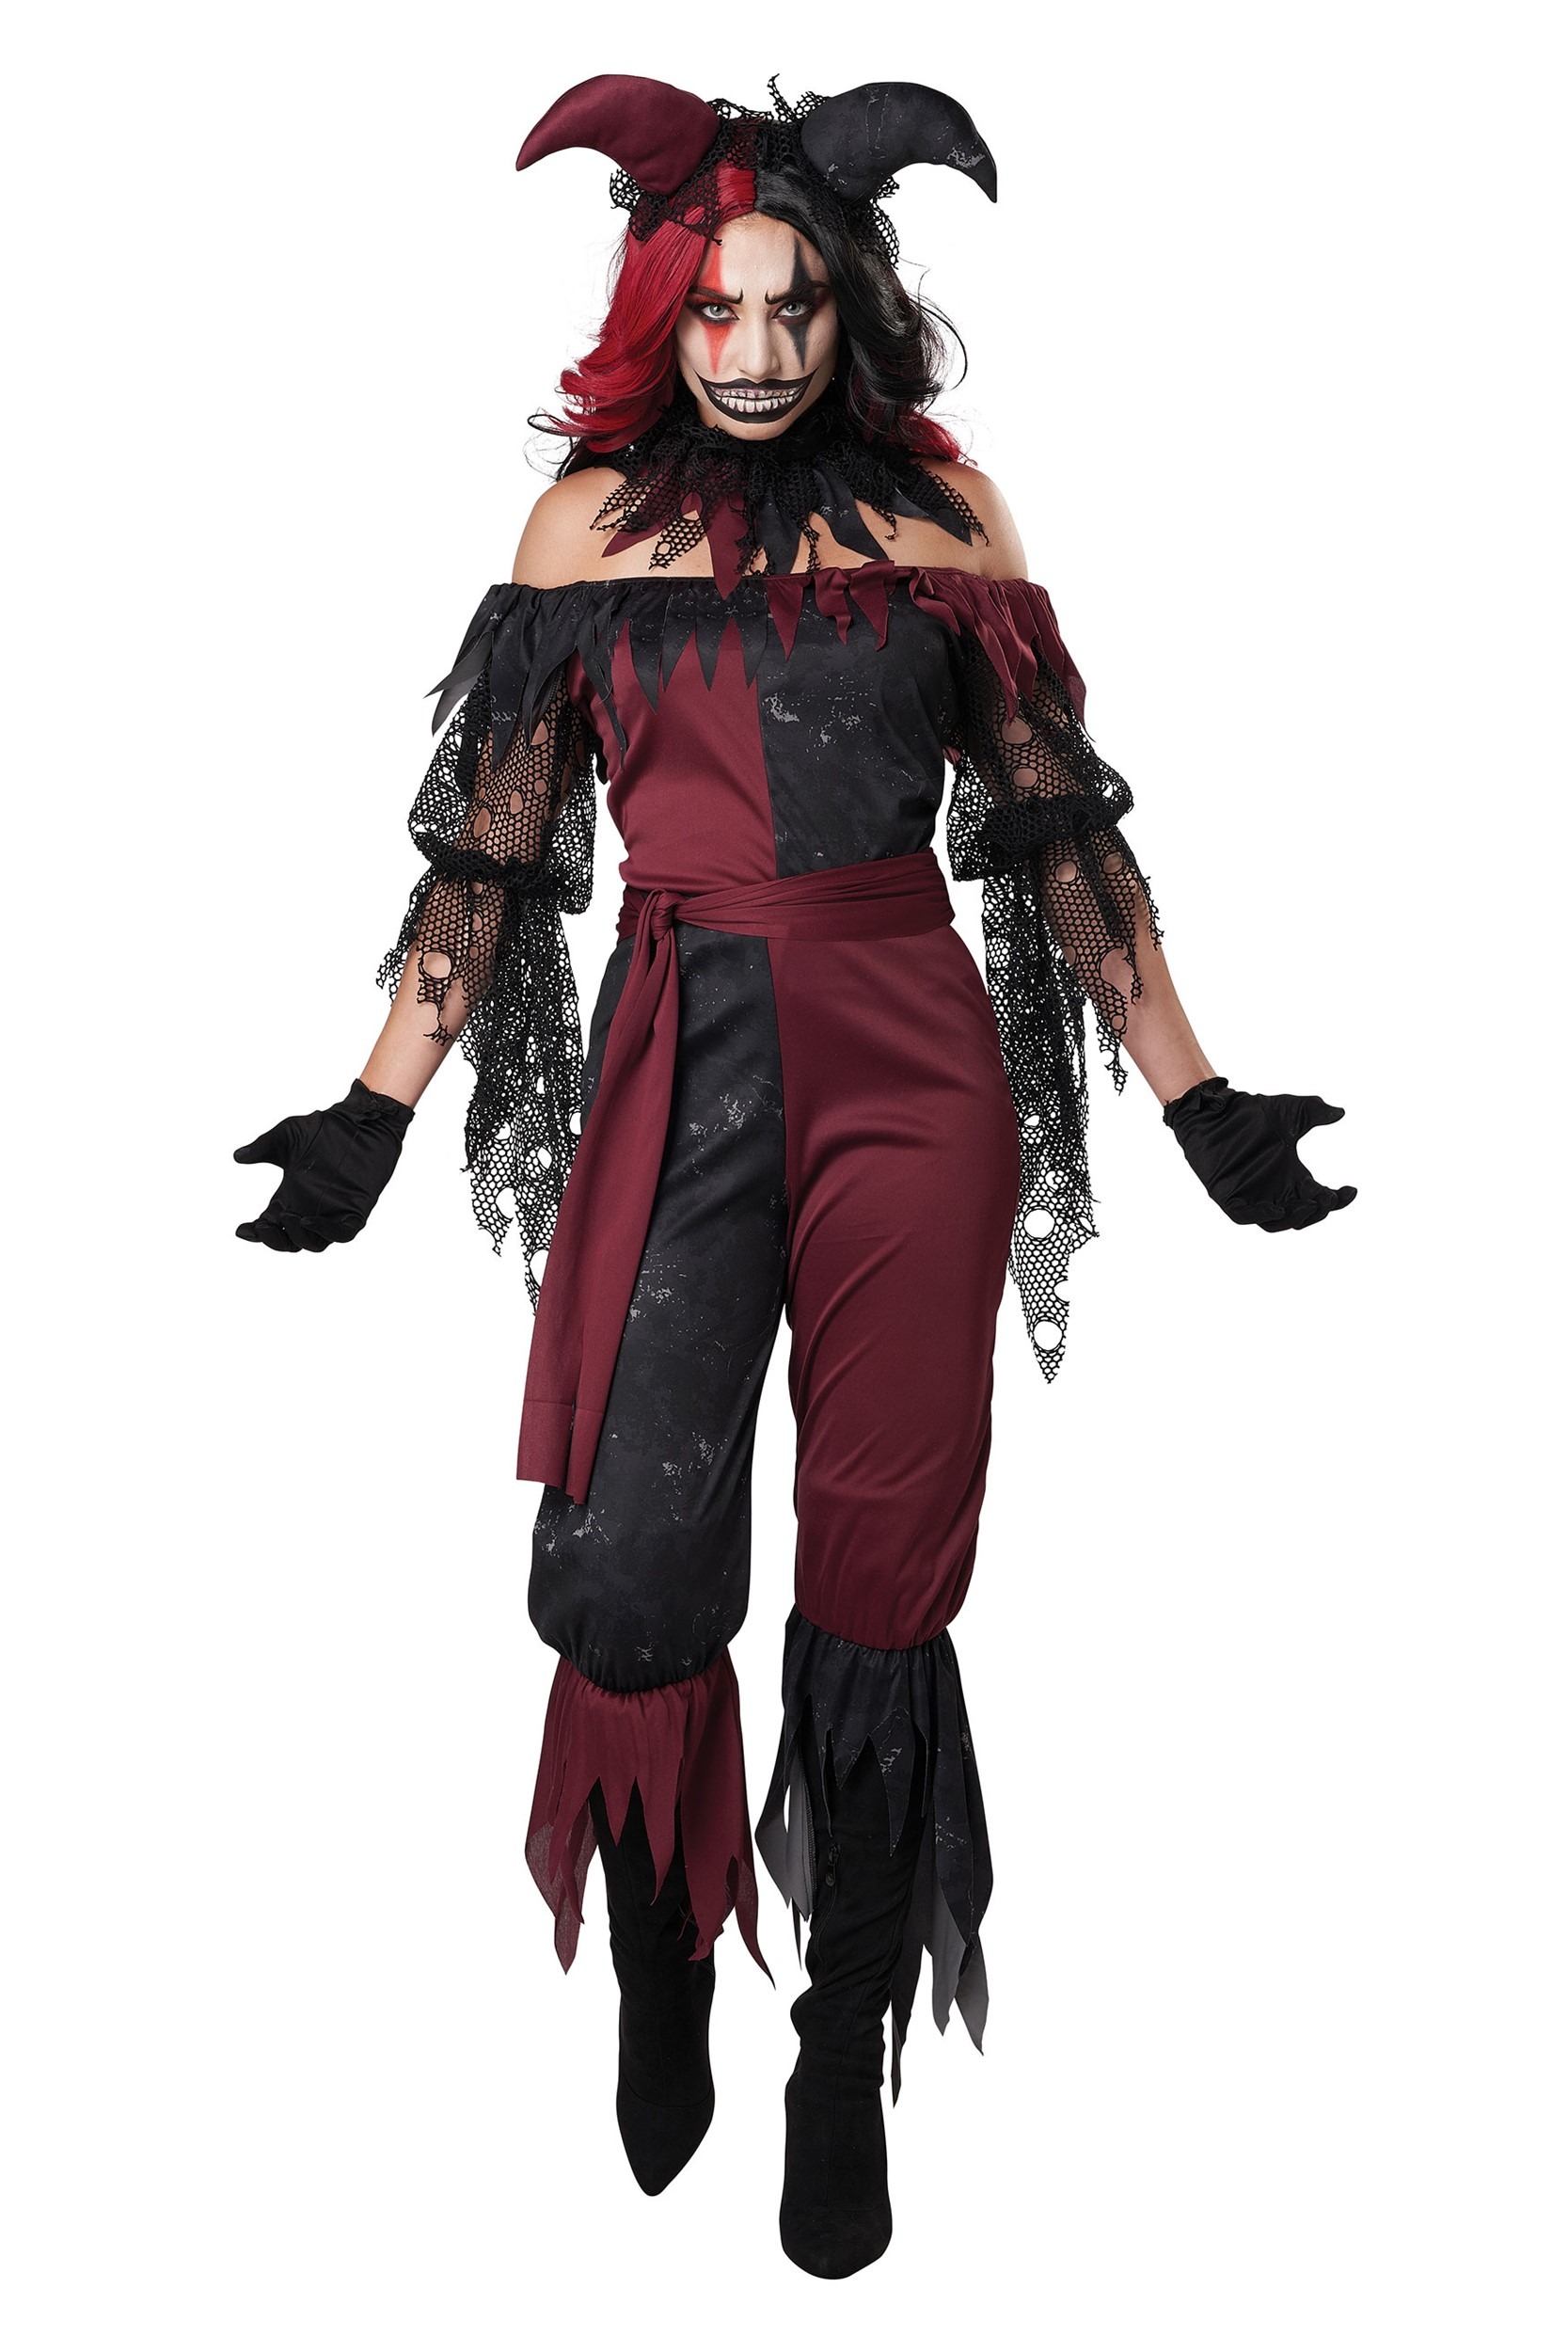 jester costume for women